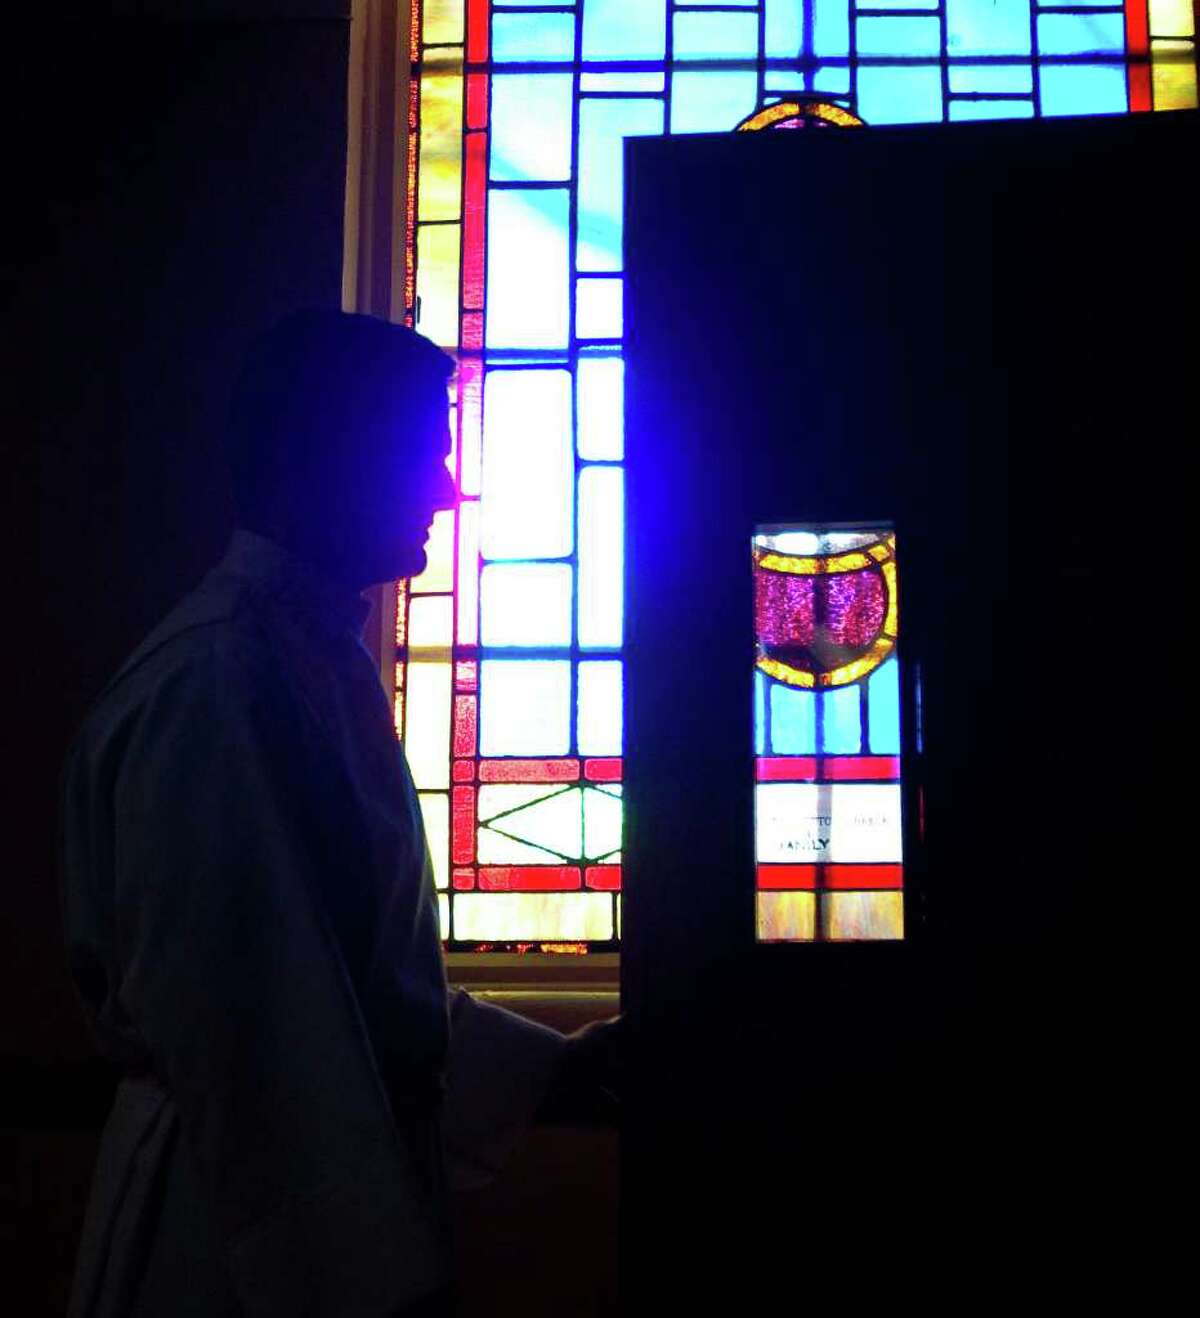 Catholics open up during sacrament